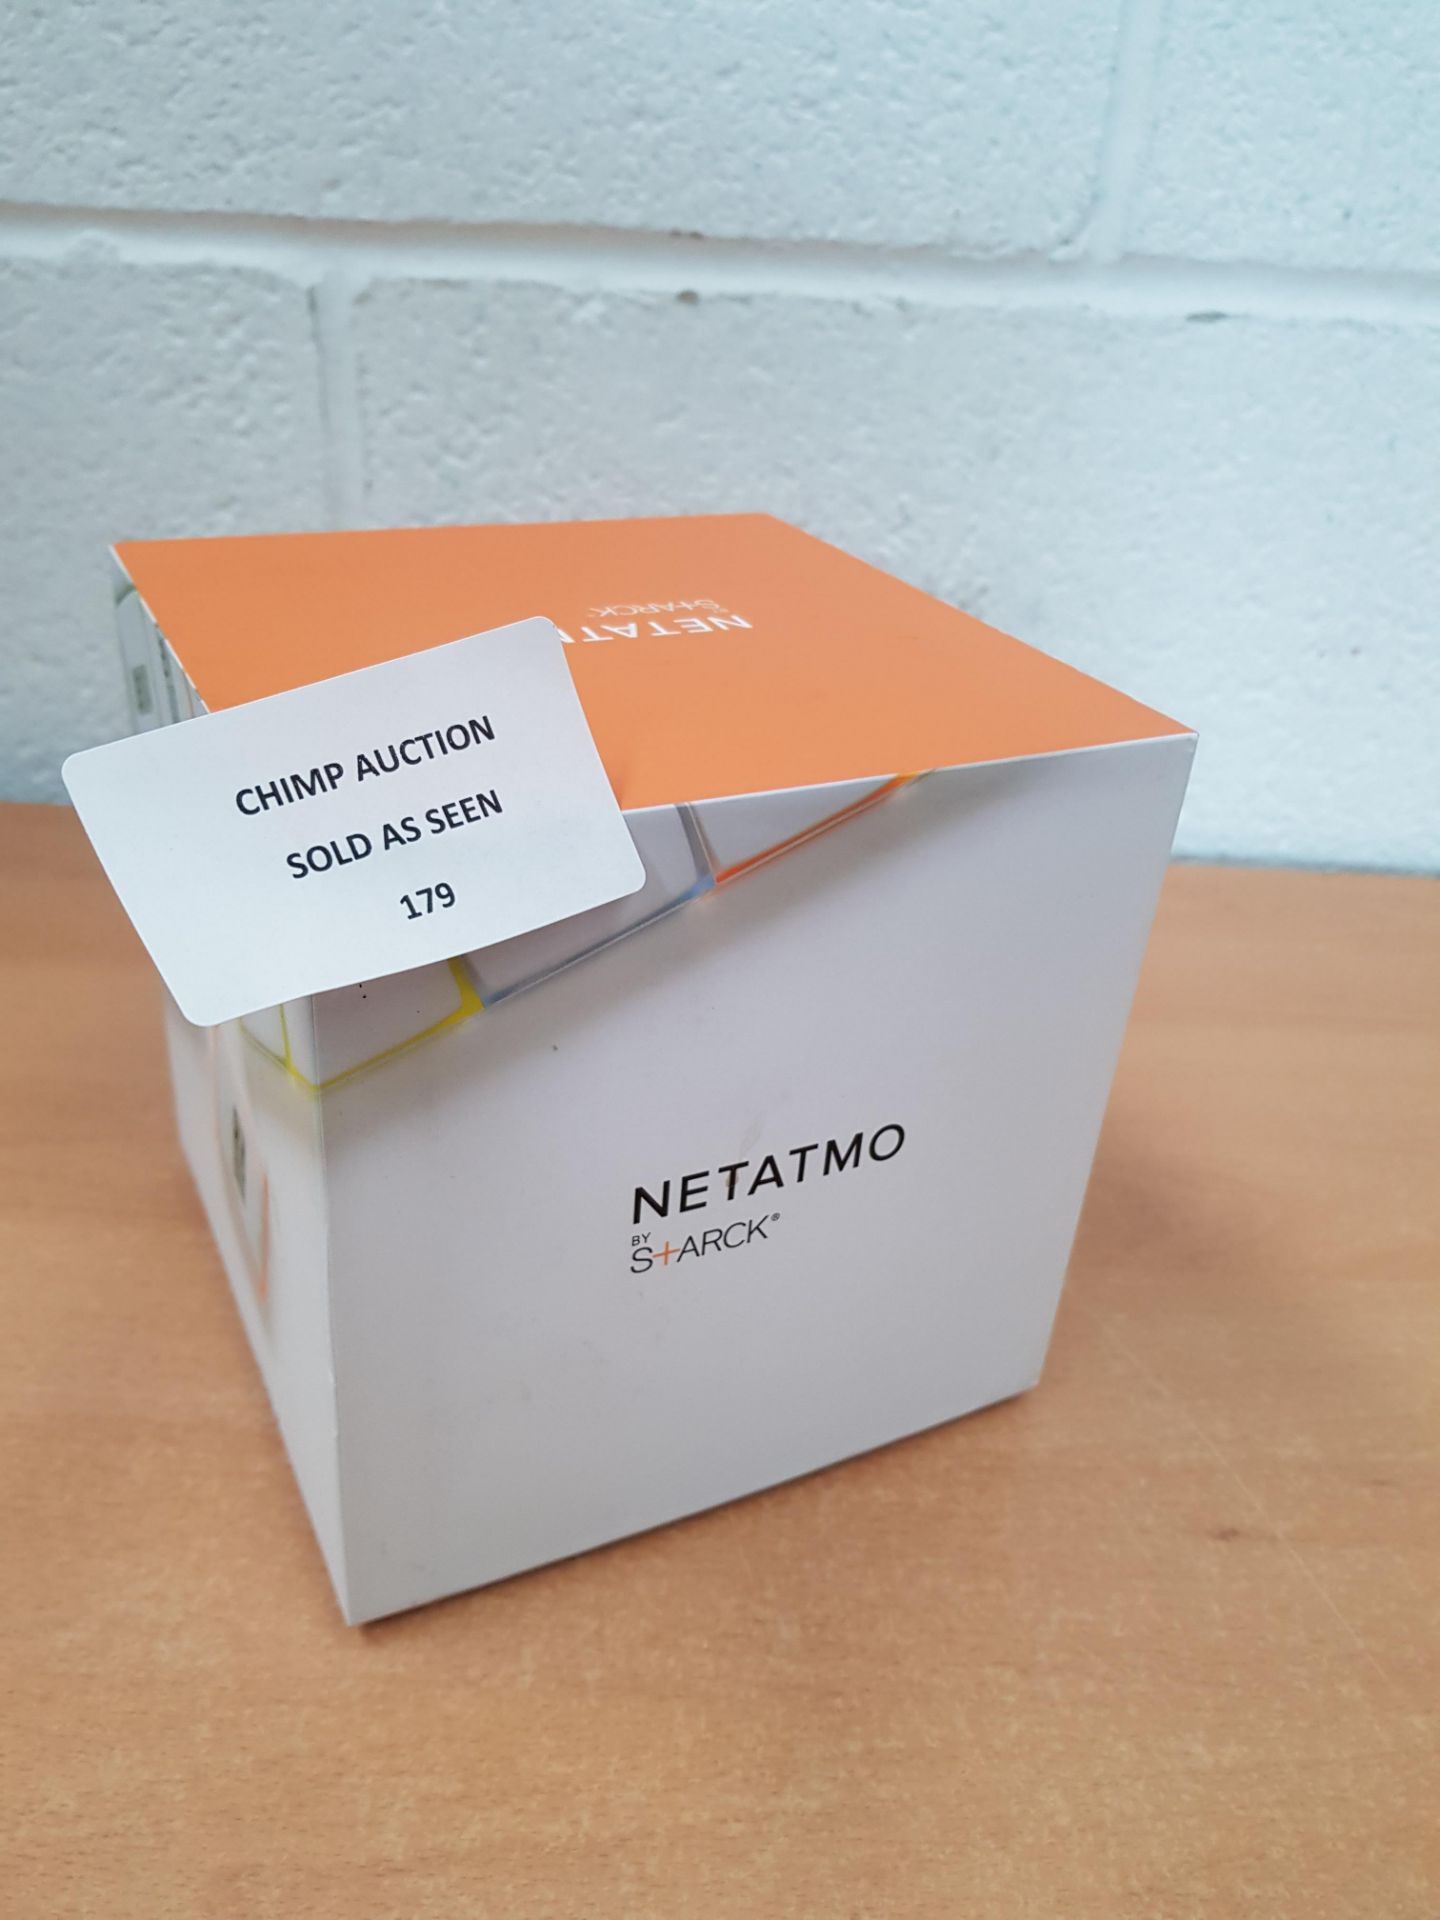 Netatmo NTH01 By S+ARCK Smart Thermostat